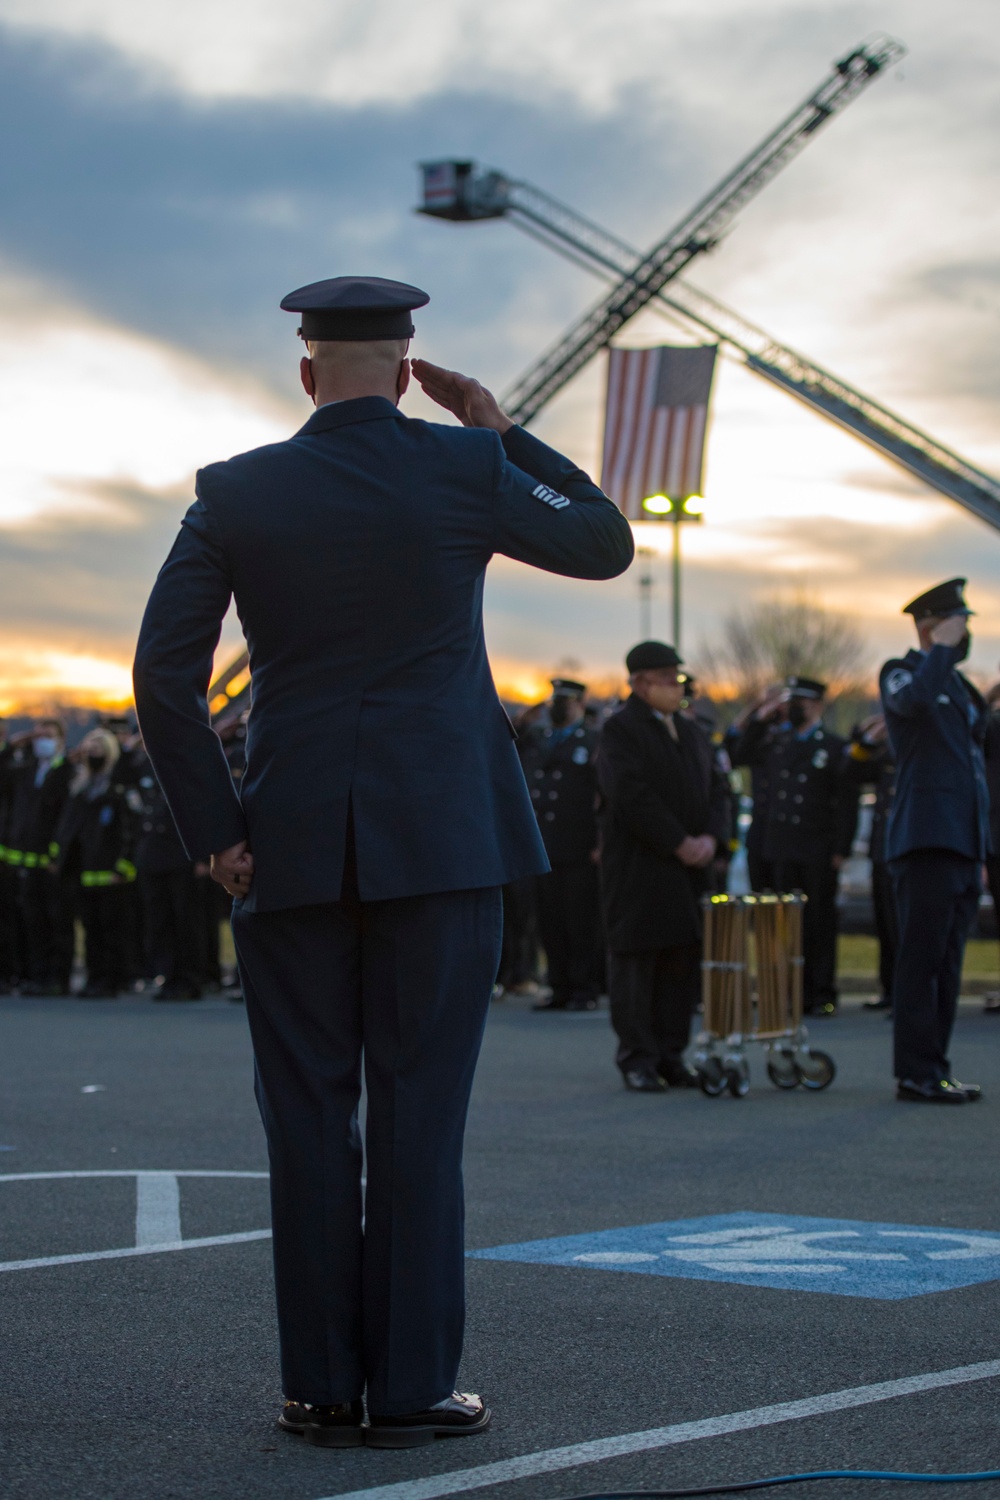 Fallen Airman, firefighter, Logan Young honored